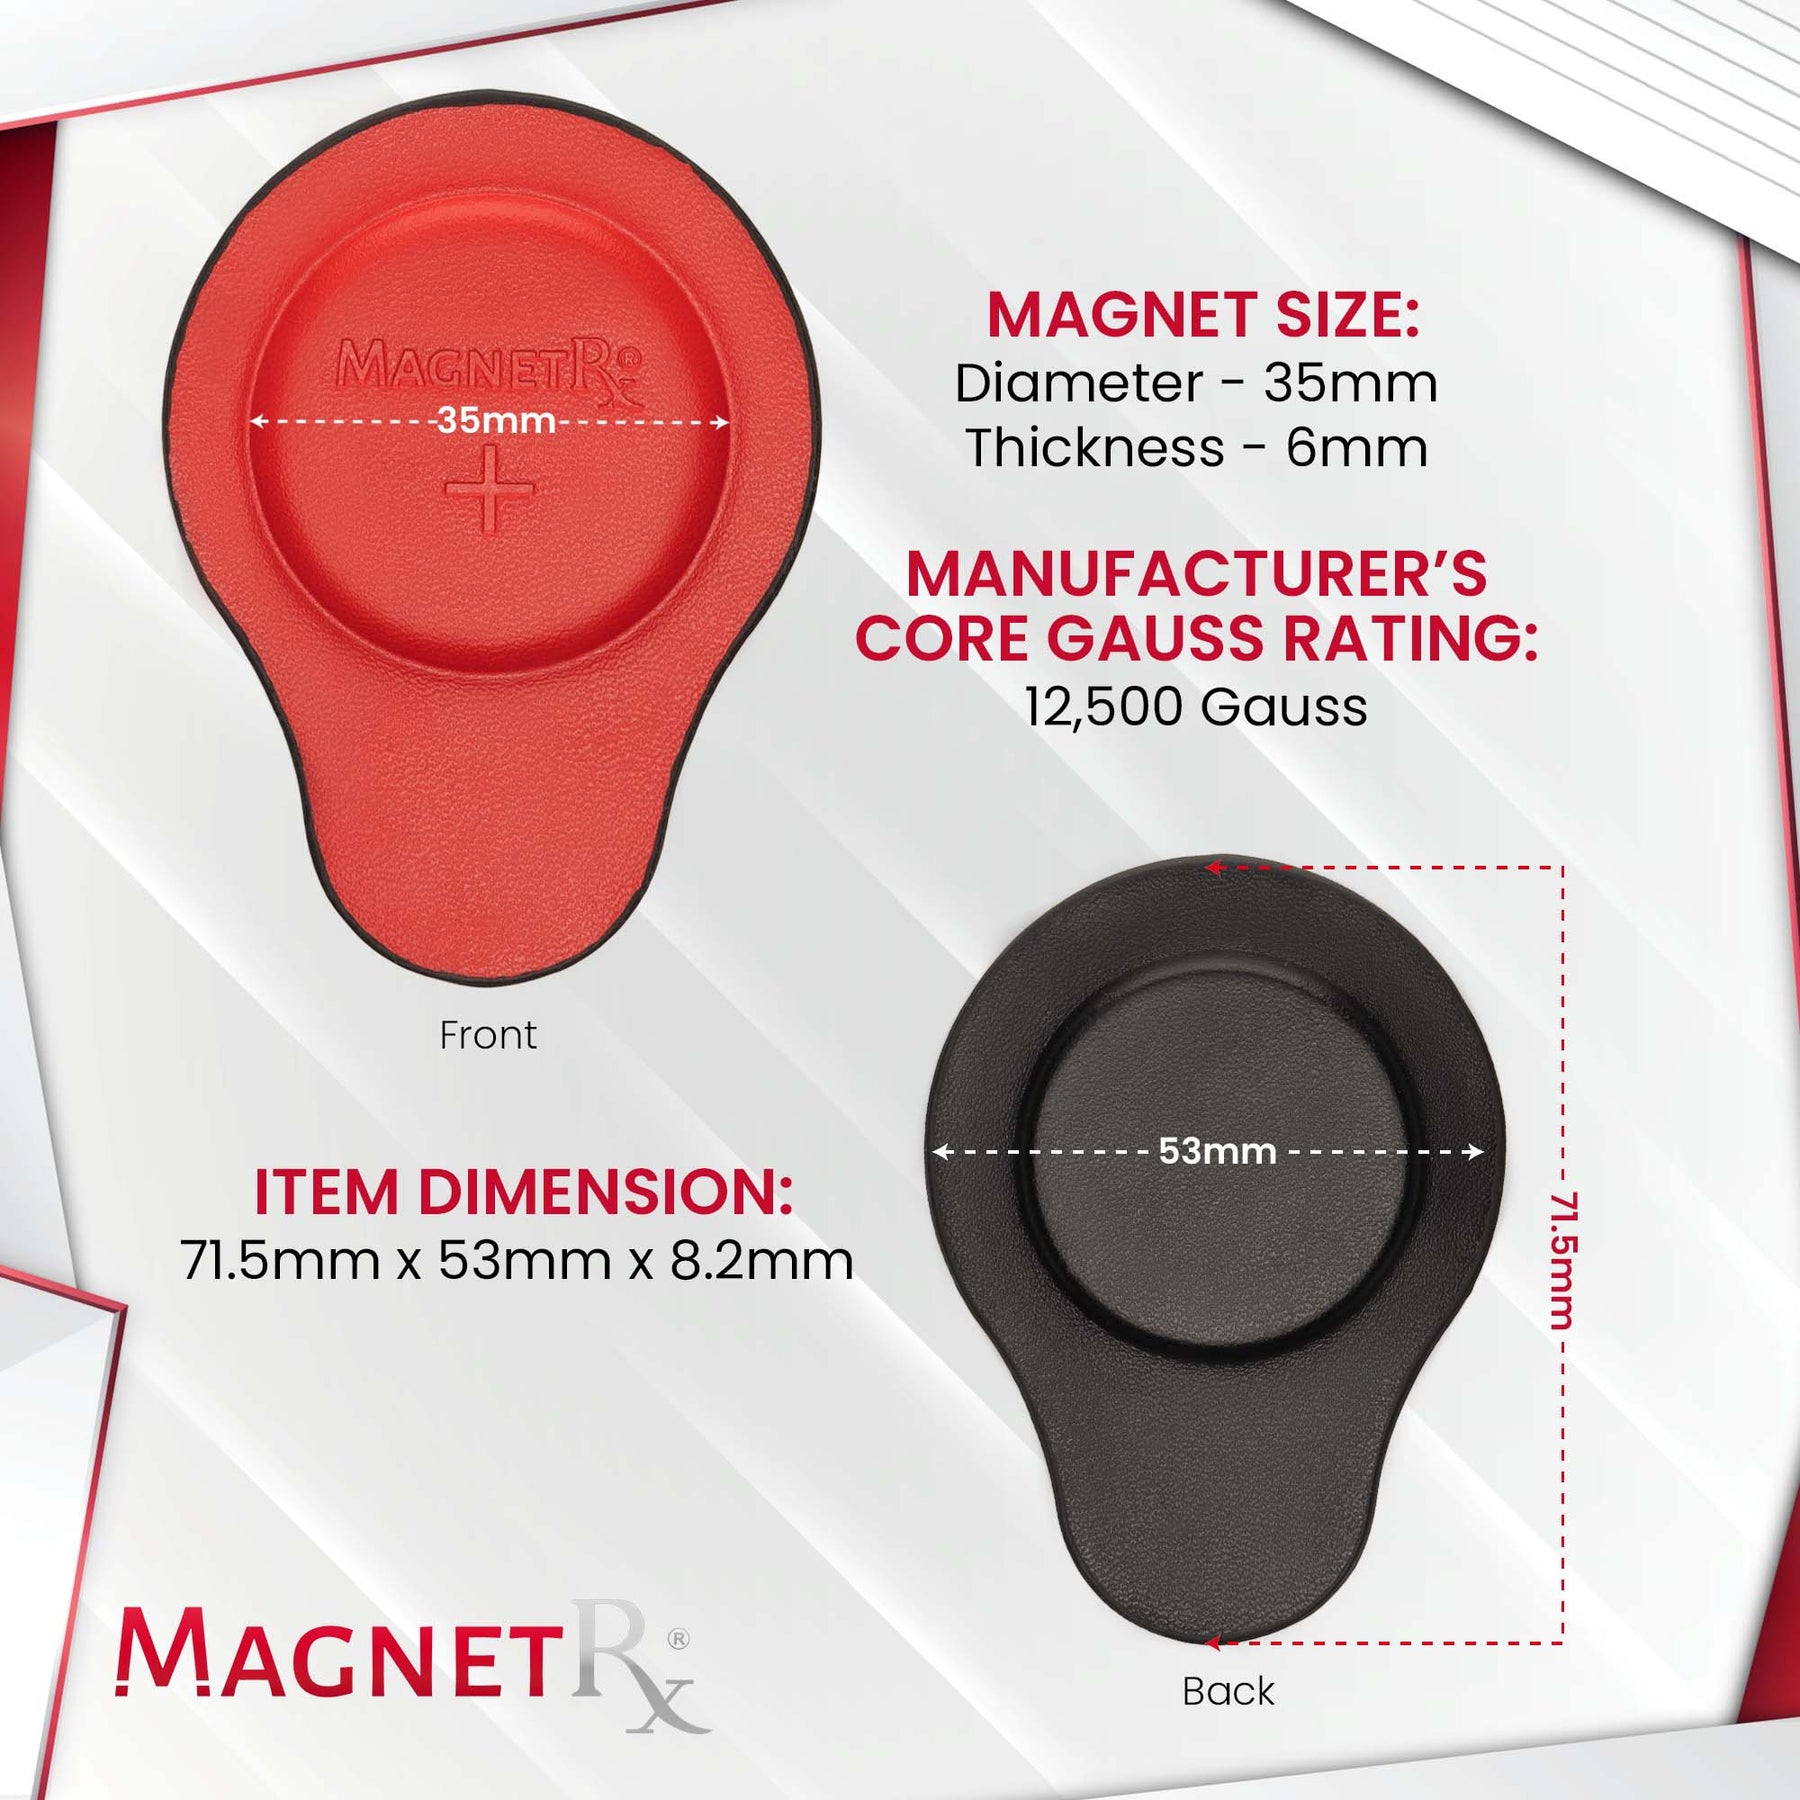 Magnetic Biomagnetic Therapy Biomagnetic Therapy Neodymium Magnet Kit (2 Units) MagnetRX